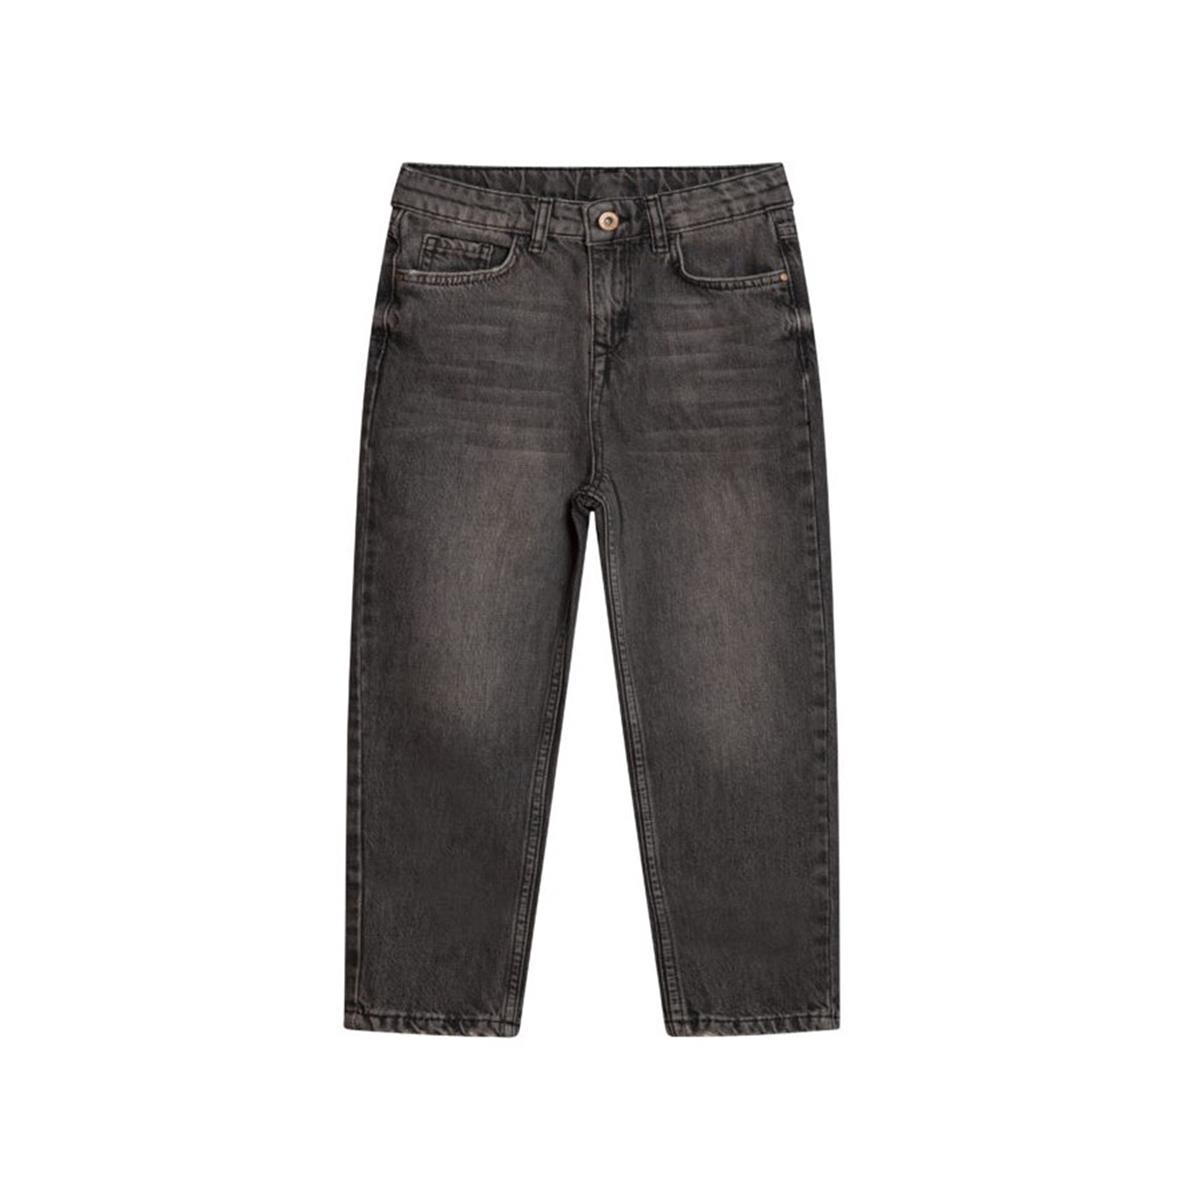 I Dig Denim - BENNY tapered high-rise jeans dark grey